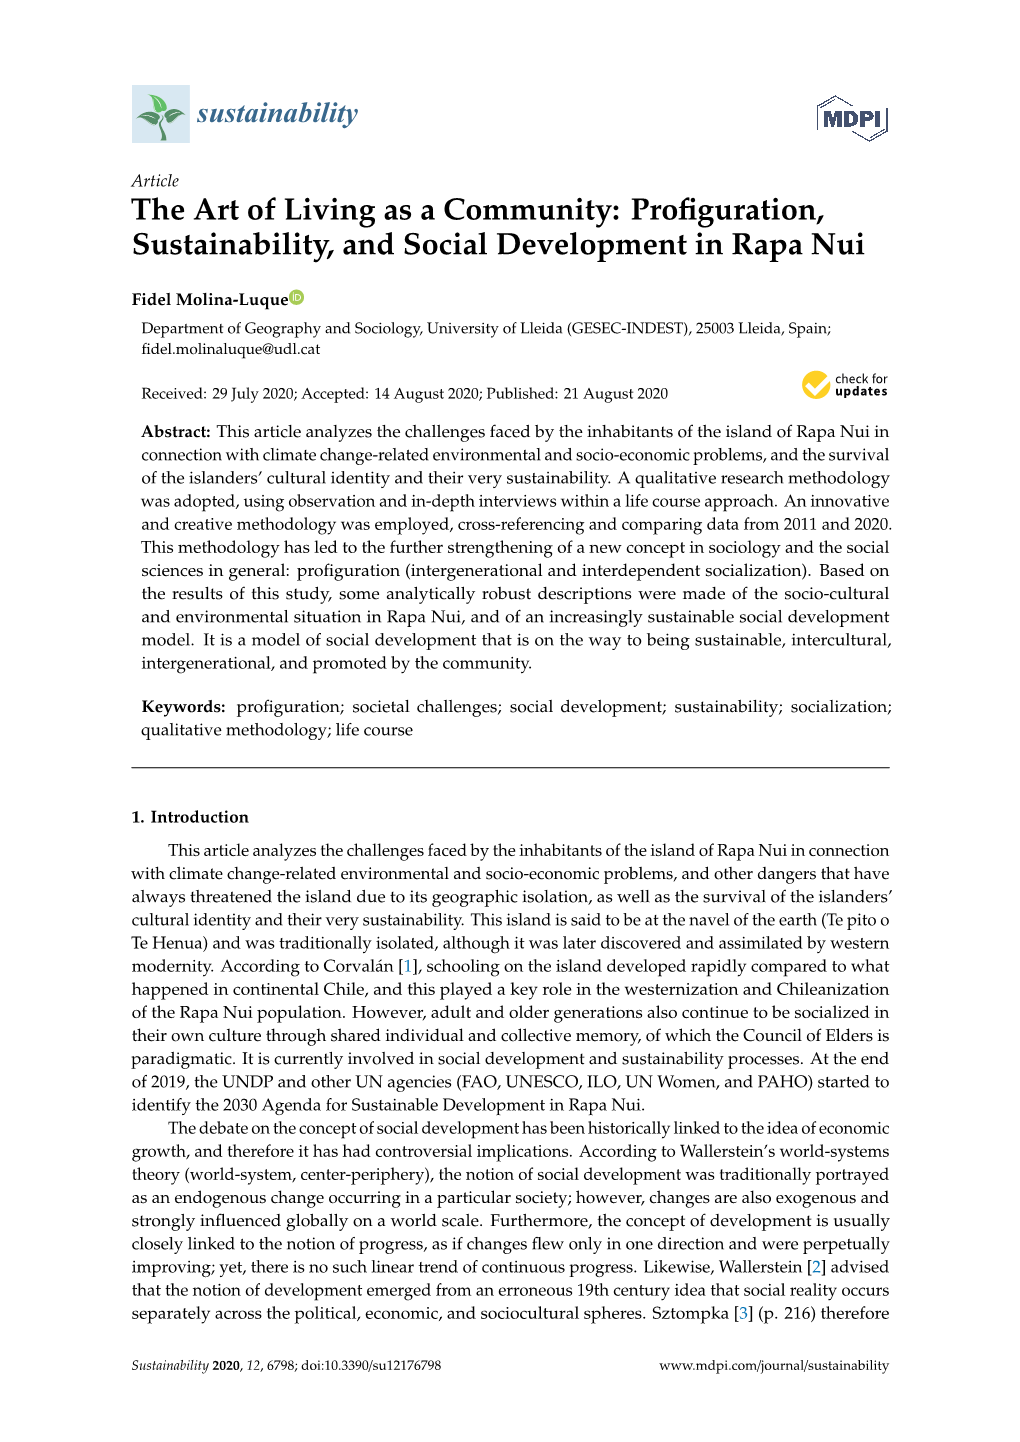 Profiguration, Sustainability, and Social Development in Rapa